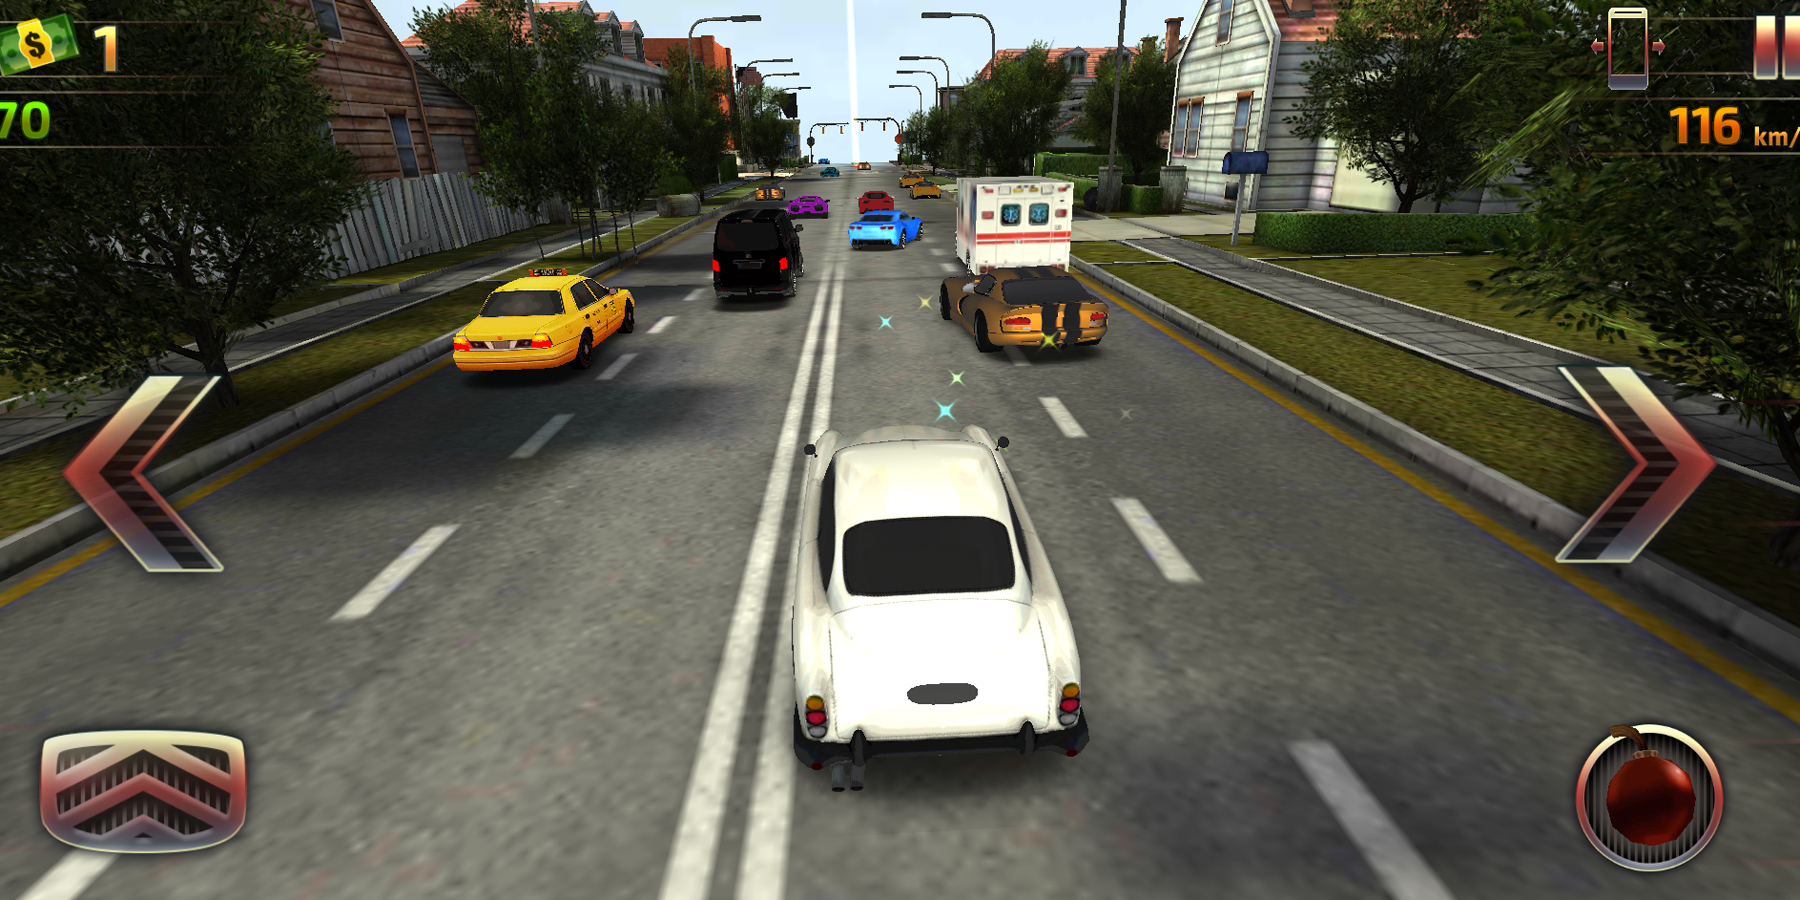 Screenshot 1 of ကားမောင်းခြင်း- မြန်နှုန်းမြင့် ပြိုင်ကား 1.0.0